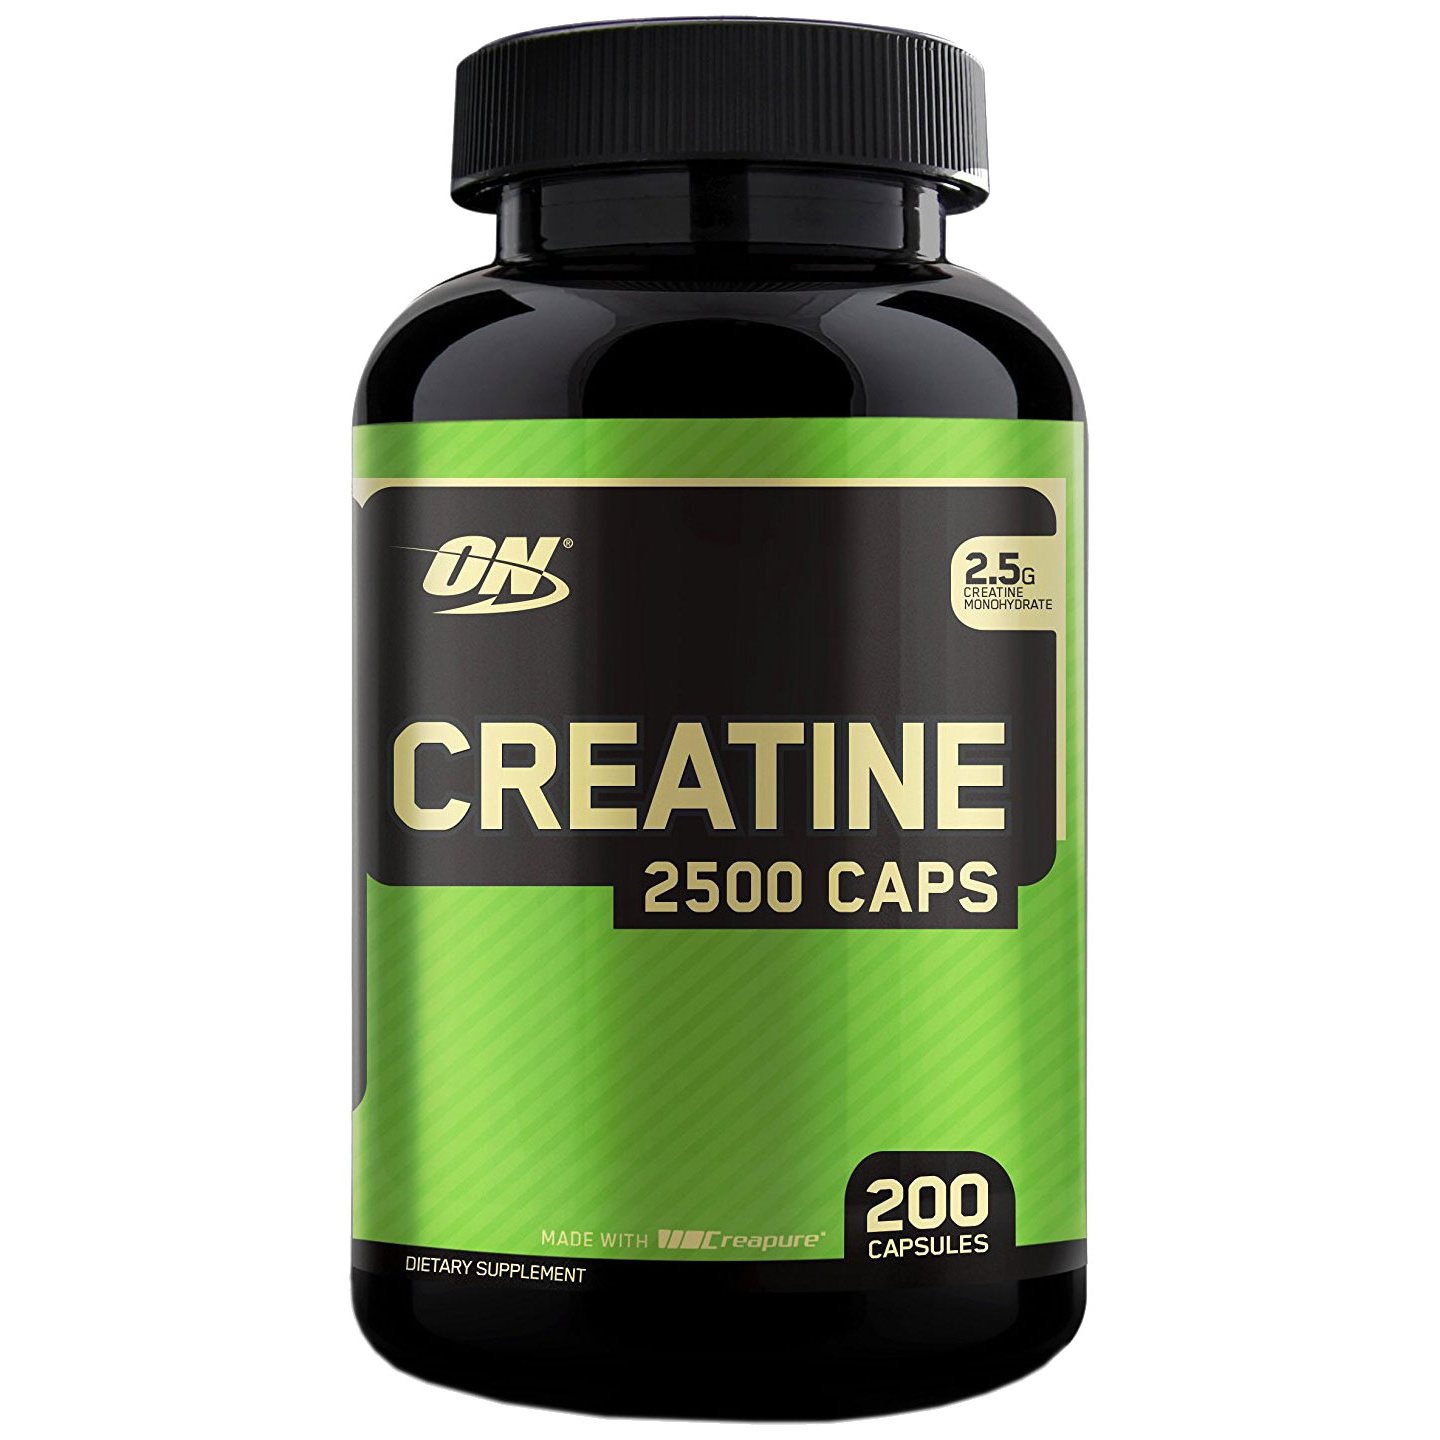 Креатин Optimum Nutrition Creatine Monohydrate 2500 Caps, 200 капсул